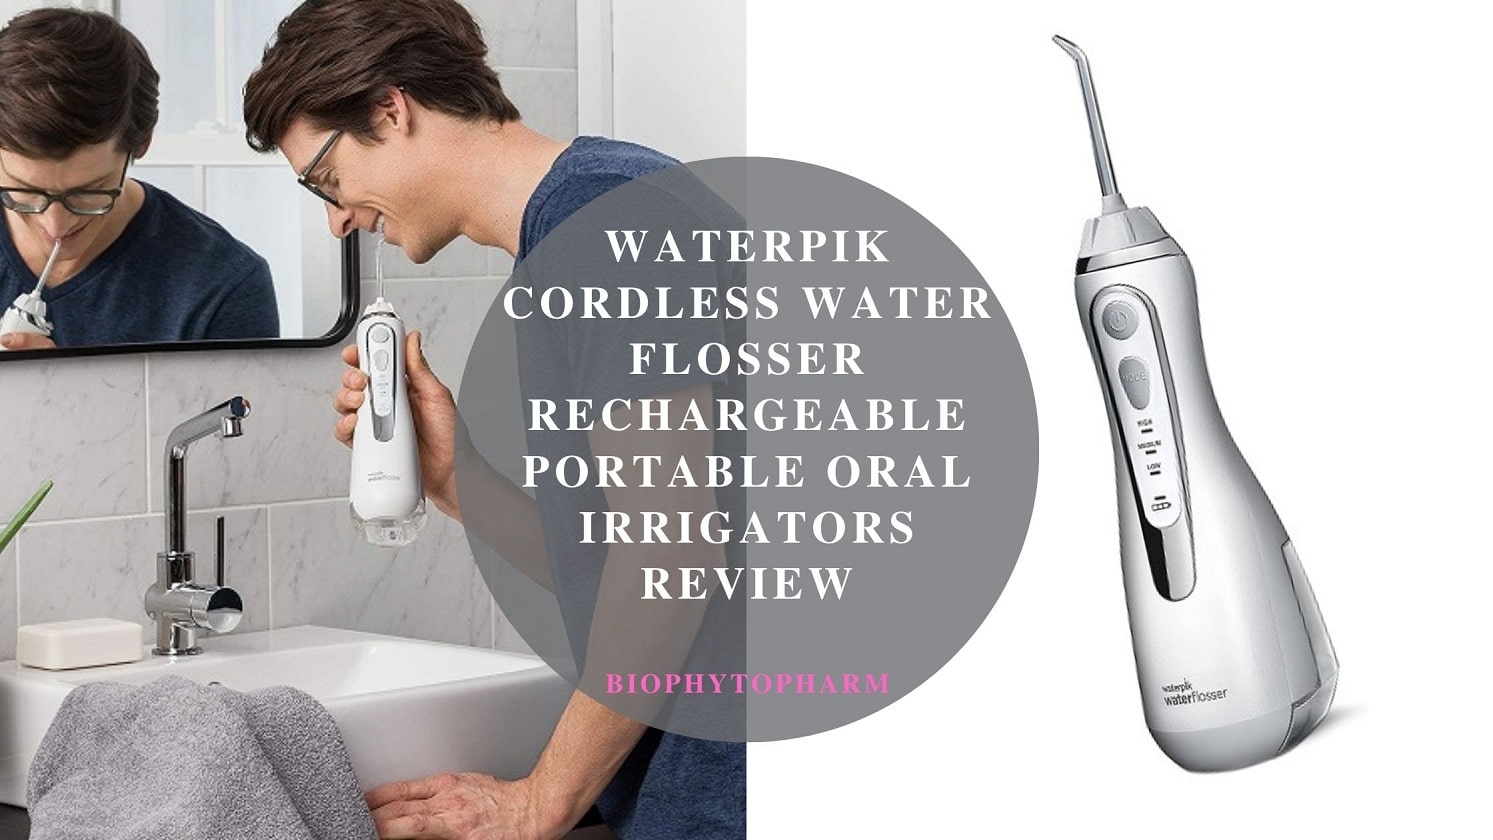 Waterpik Cordless Water Flosser Rechargeable Portable Oral irrigators Review